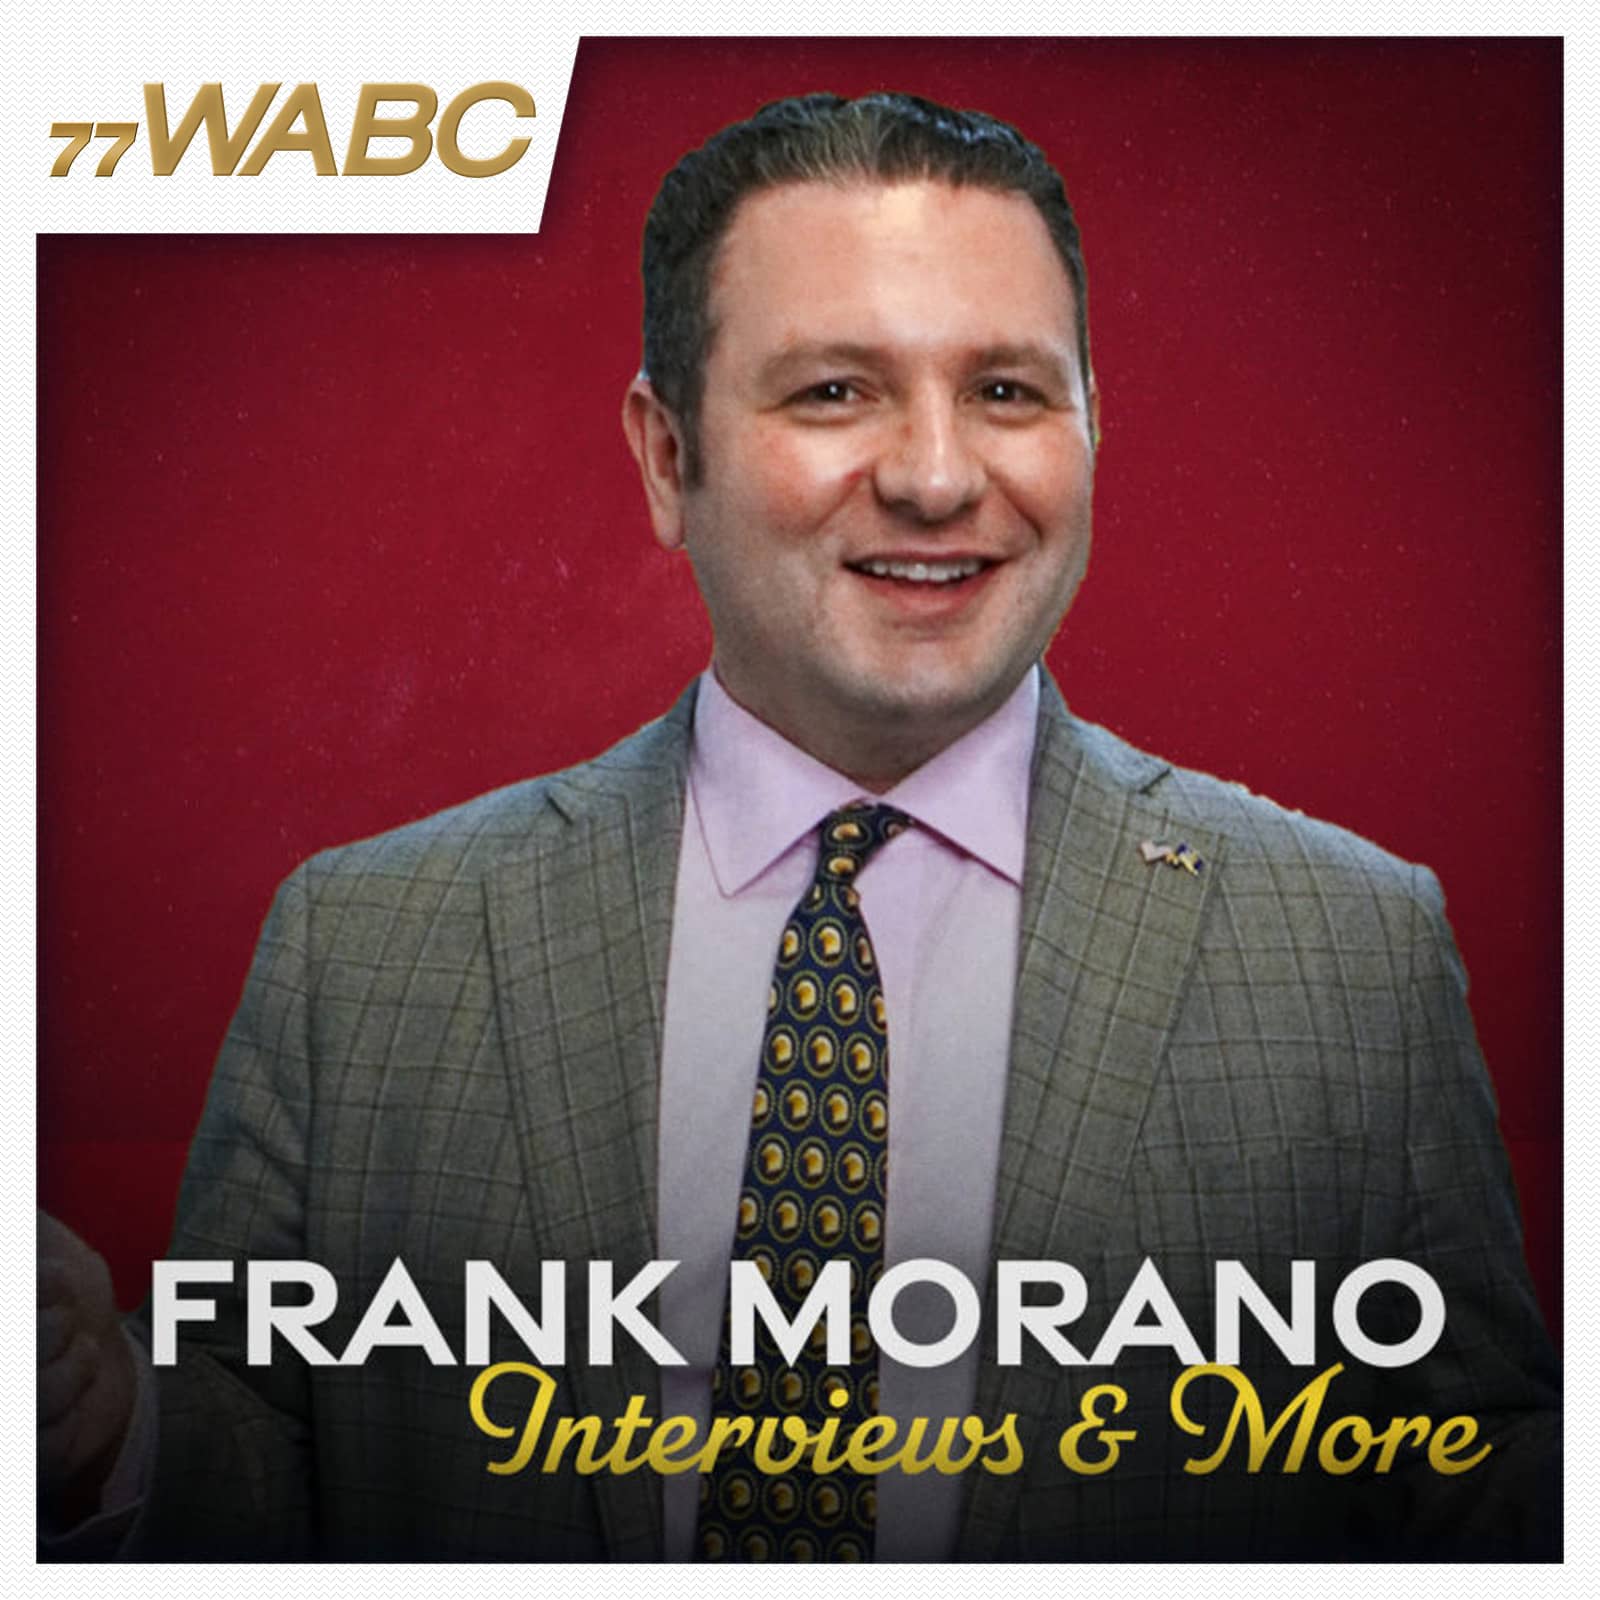 frank-morano-interviews-and-more-podcast-new-logo-188